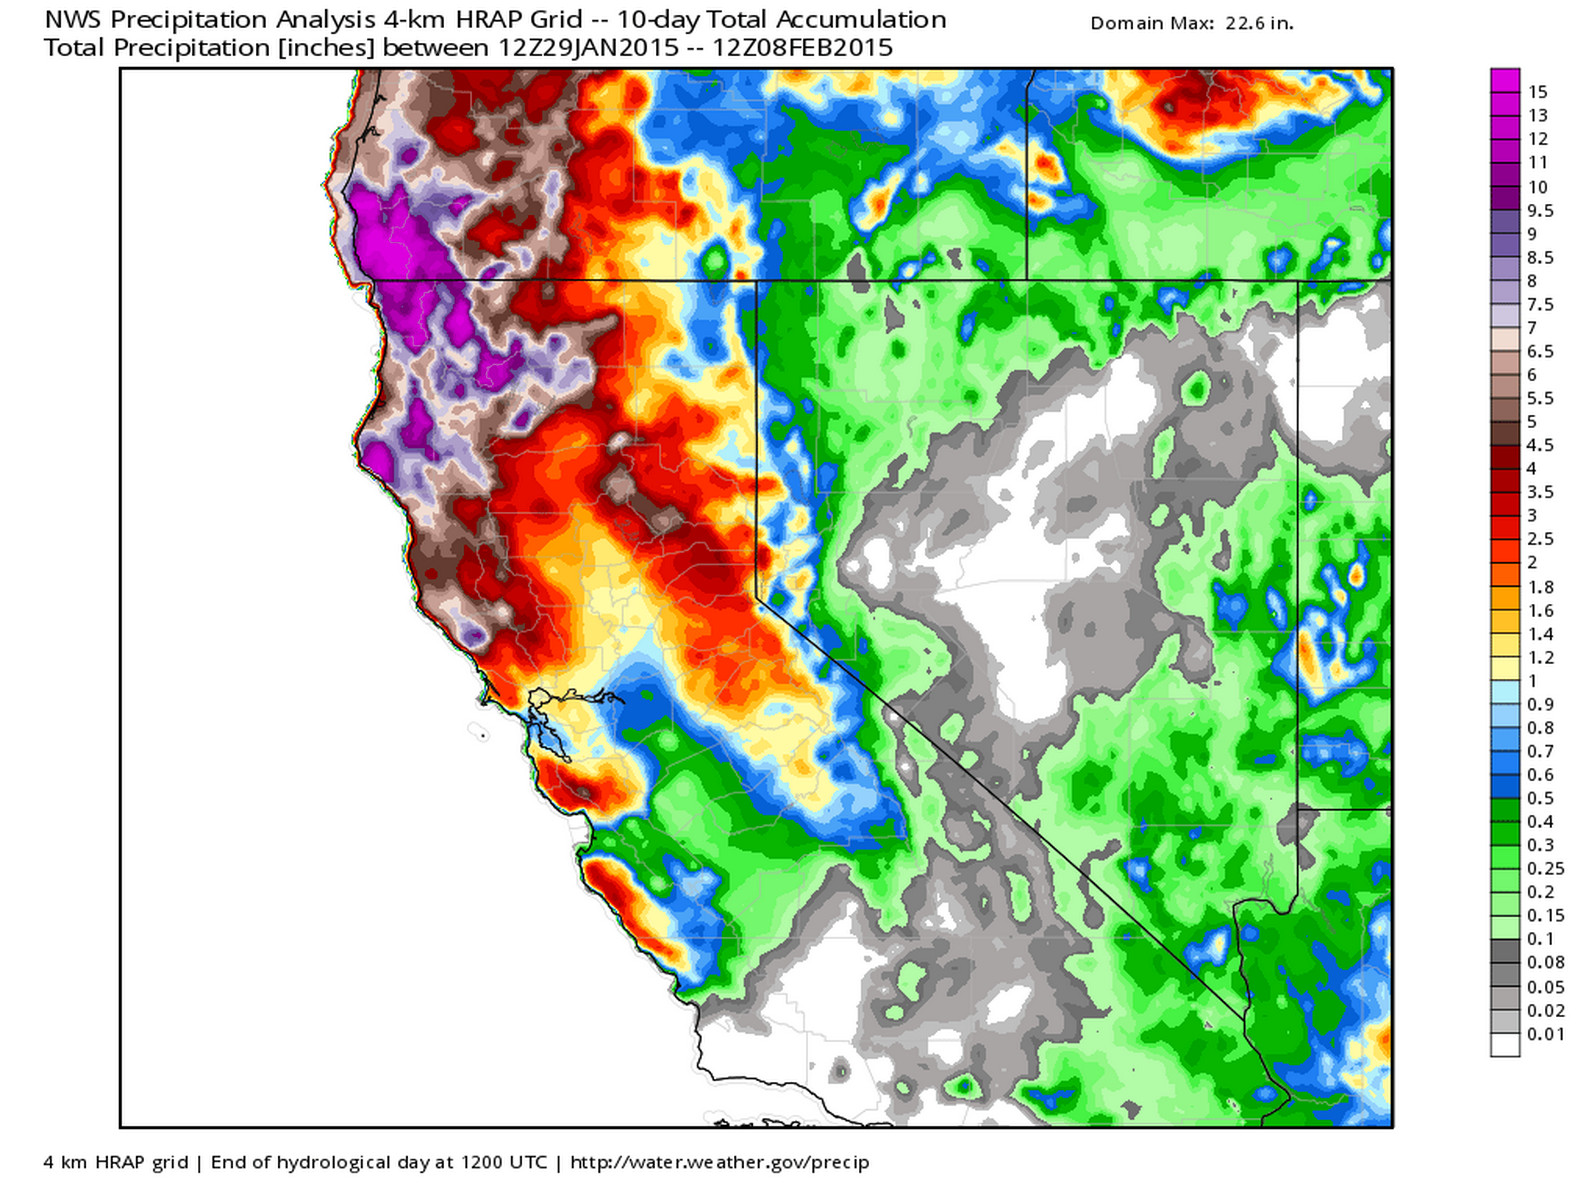 NWS precipitation analysis 10 day totals | WeatherBell Analytics